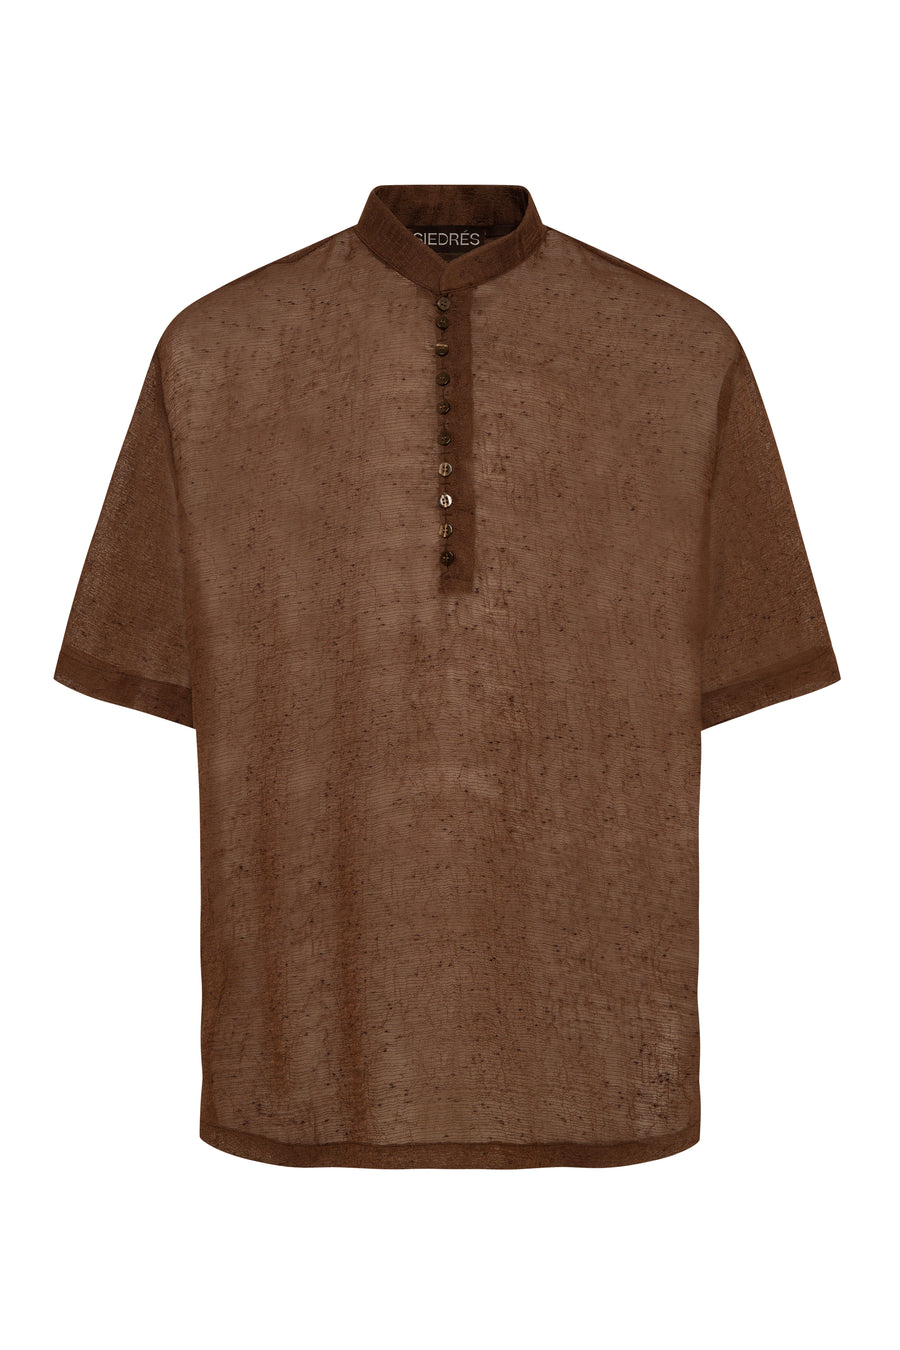 EMANUEL - Mandarin collar short sleeve shirt